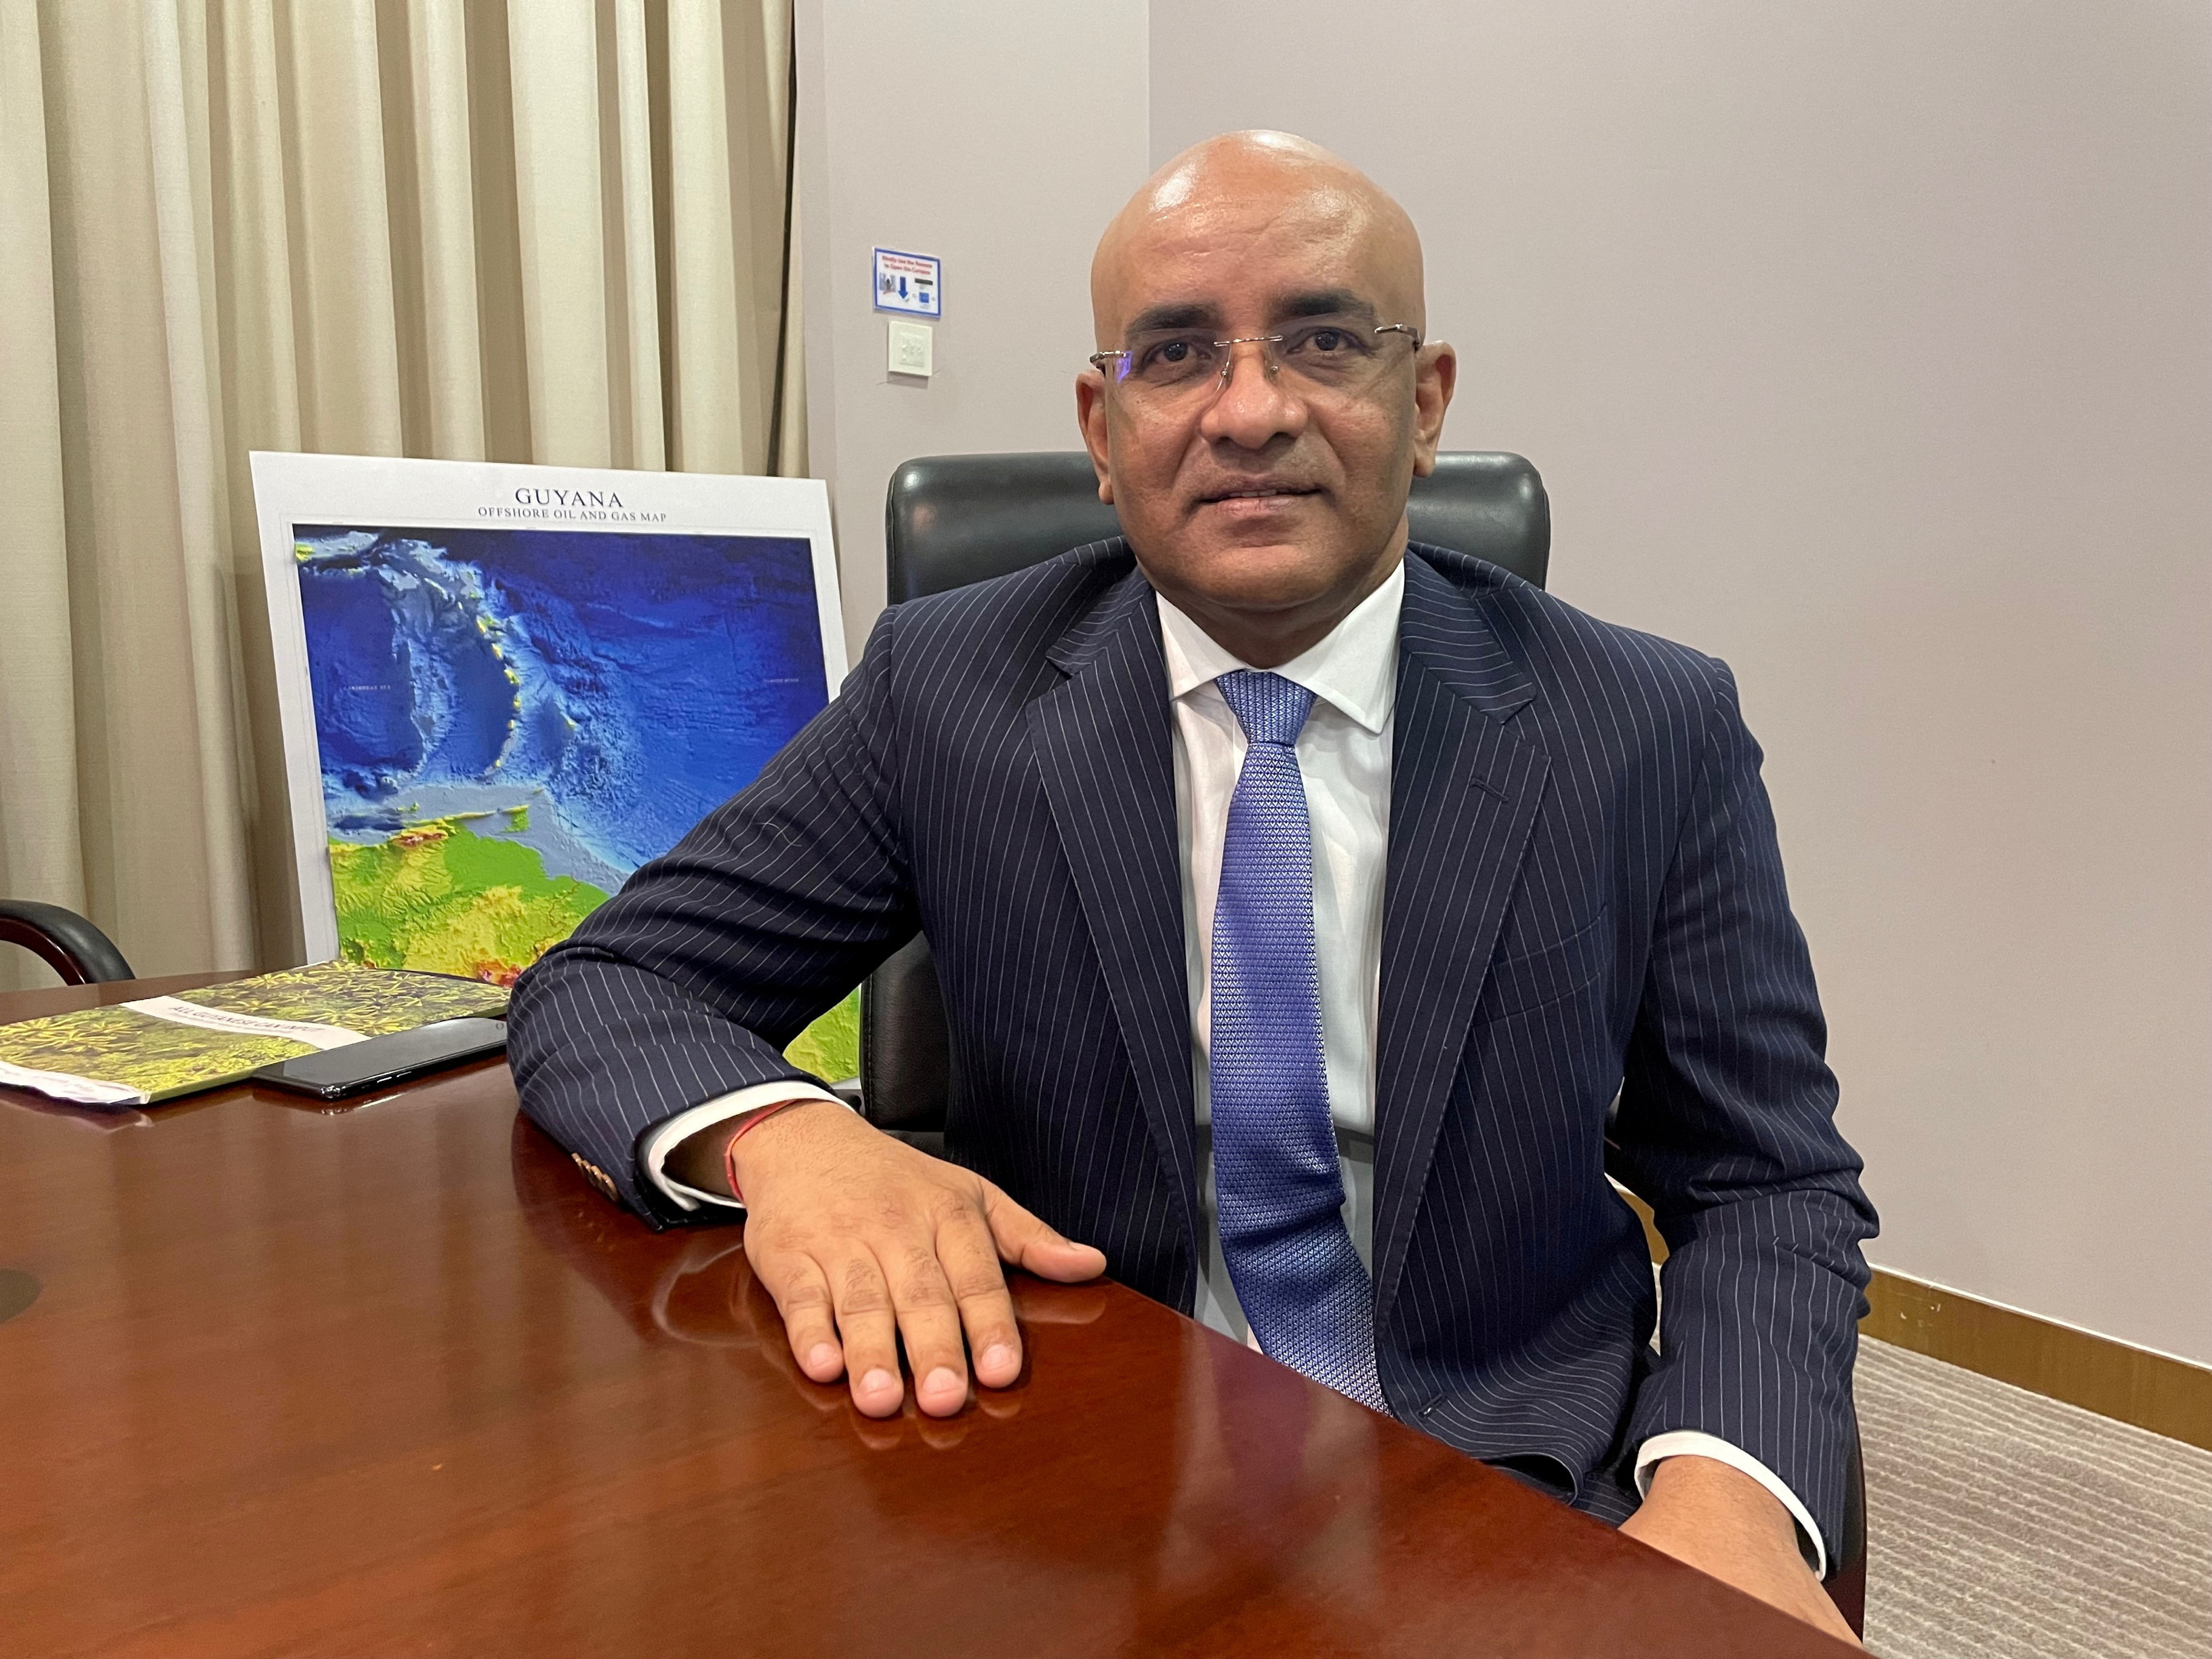 Guyana's Vice President Bharrat Jagdeo